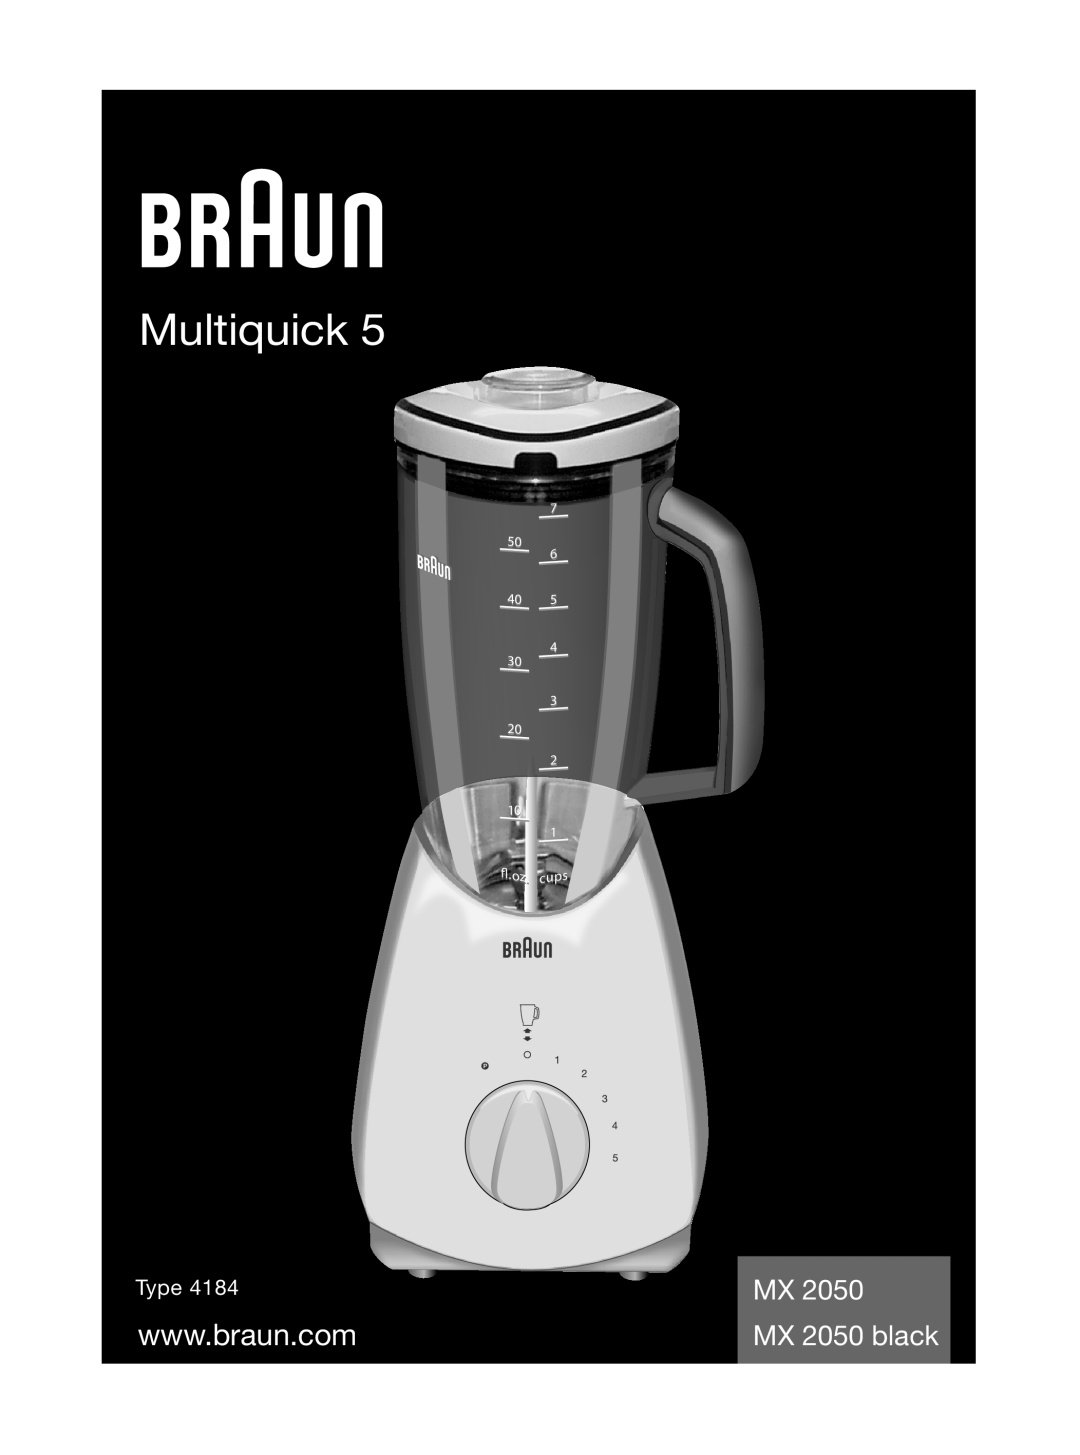 Braun MX 2050 BLACK manual Multiquick, MX 2050 black, Type, 50 40 30 20 10, 7 6 5 4 3 2 1 cups, fl. oz. z 